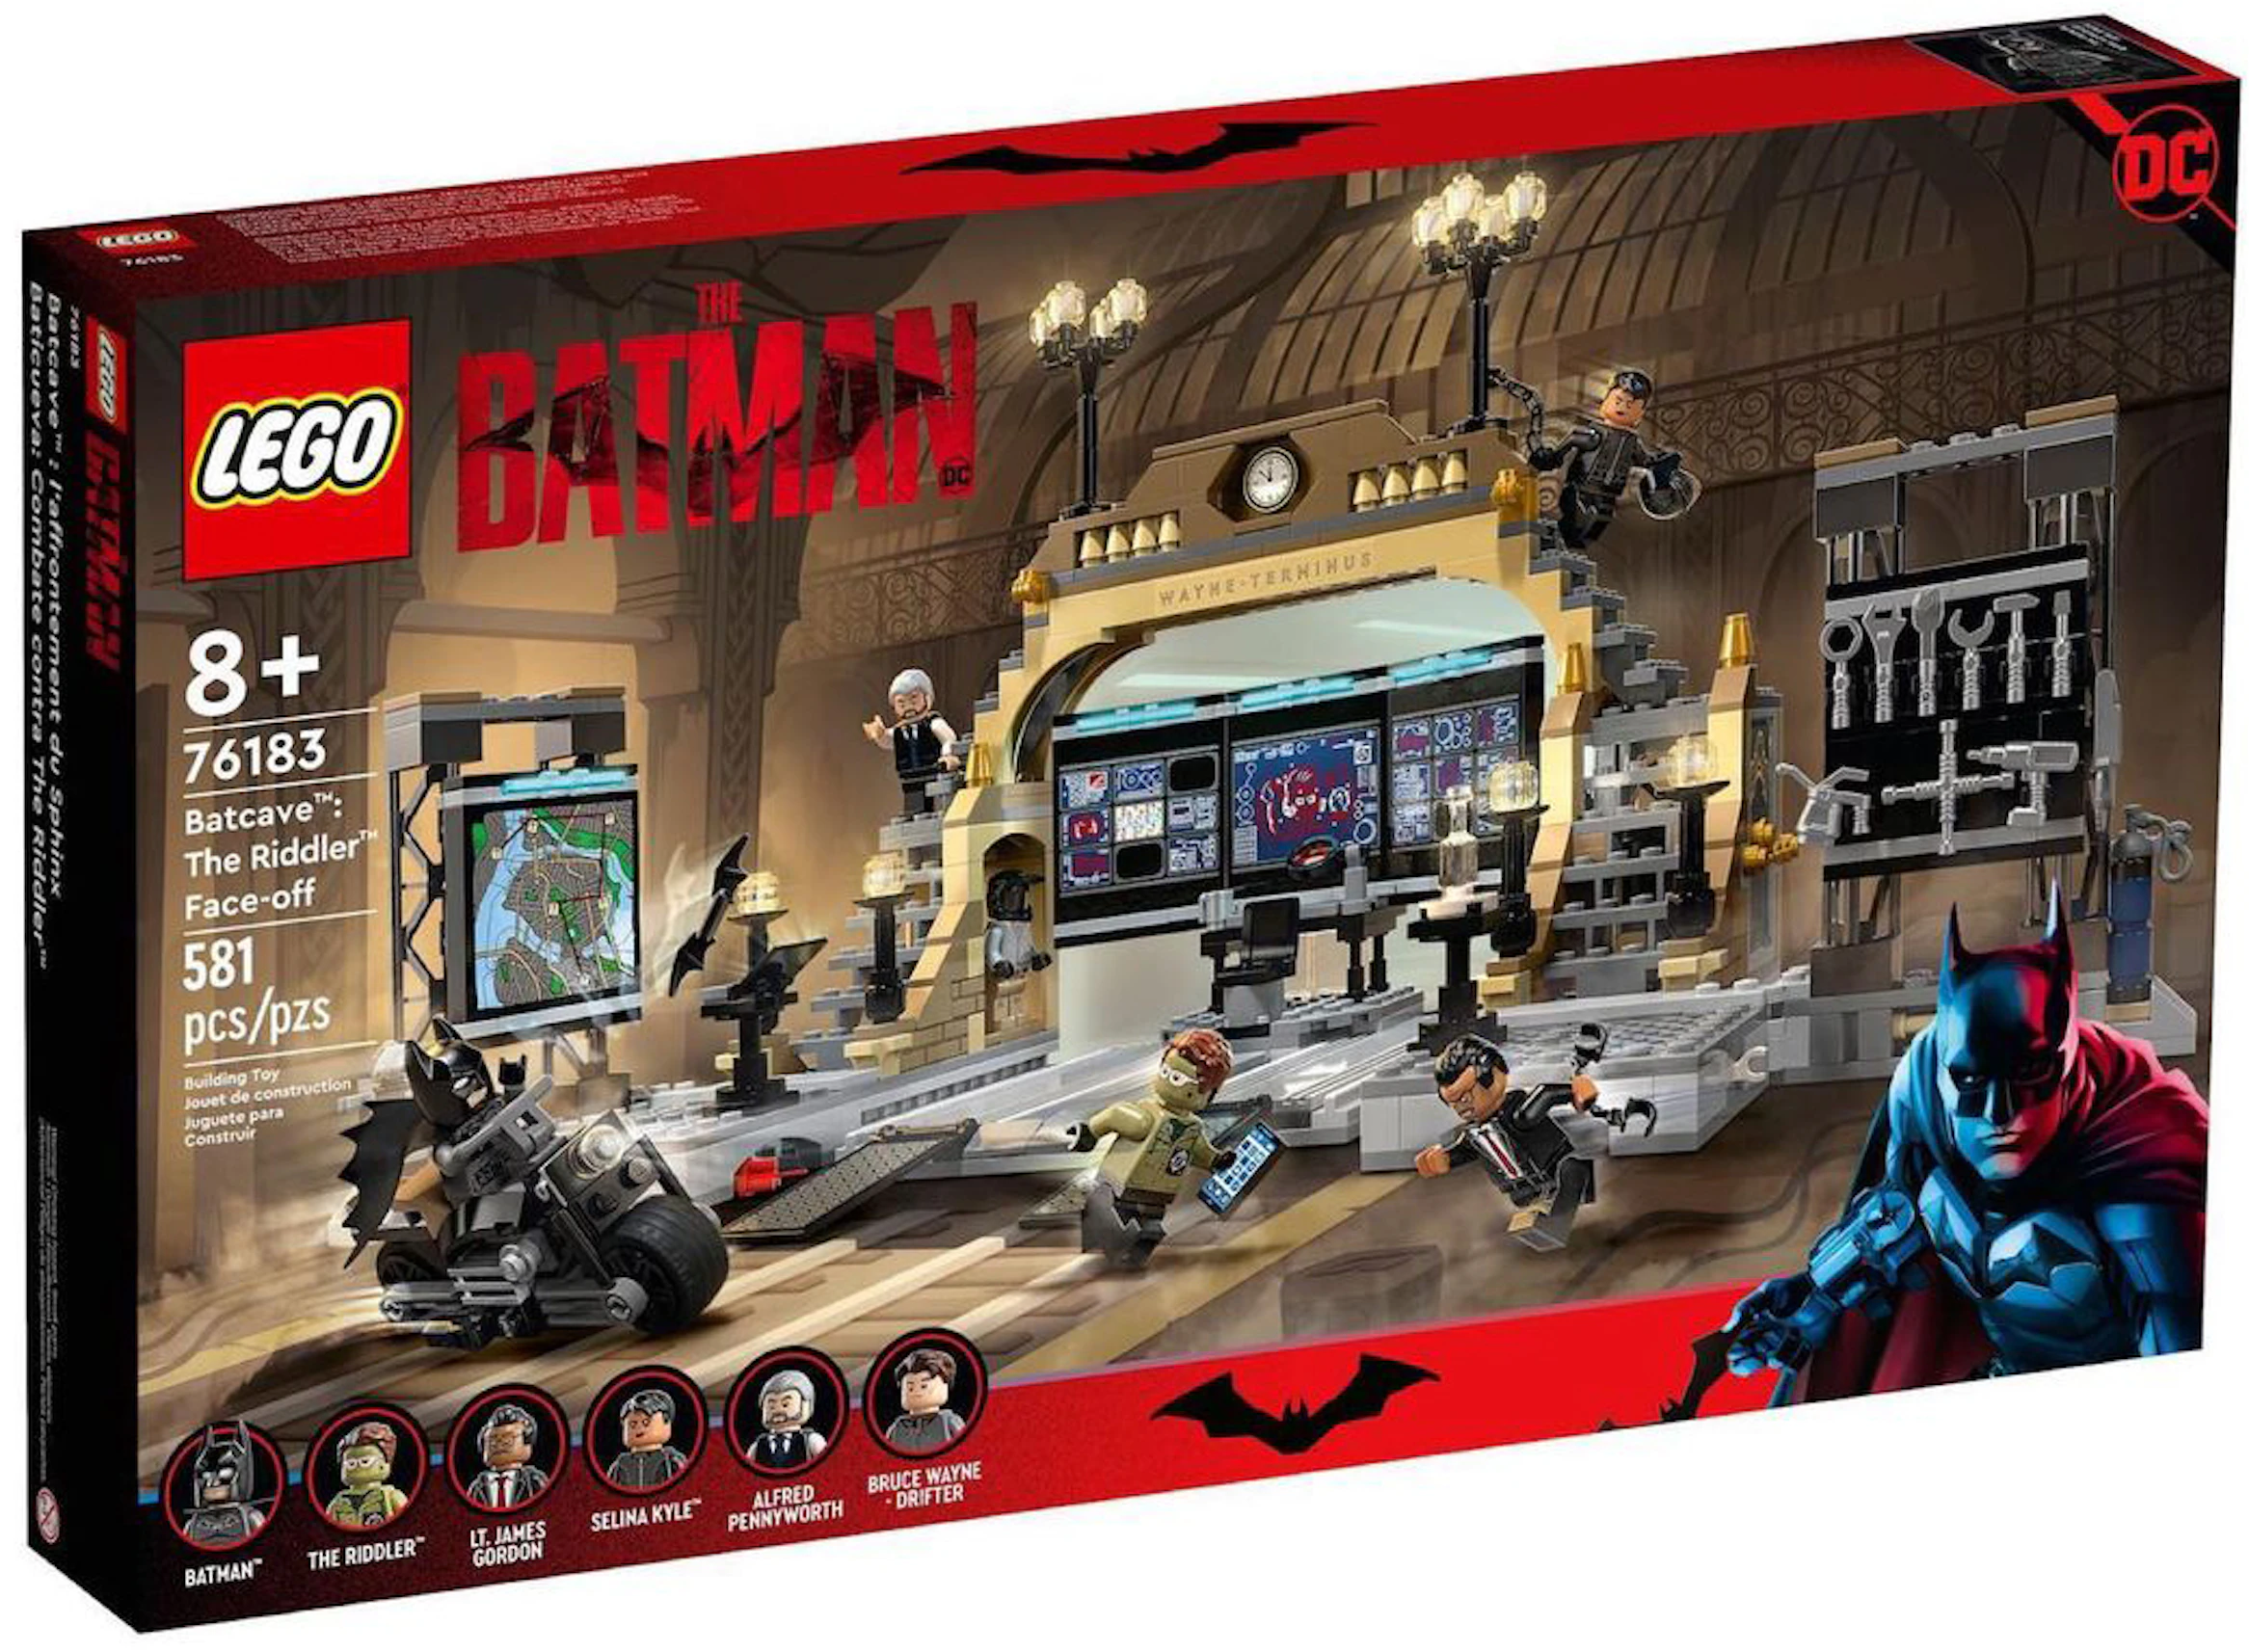 LEGO DC The Batman Batcave: The Riddler Face-Off Set 76183 - FW21 - US